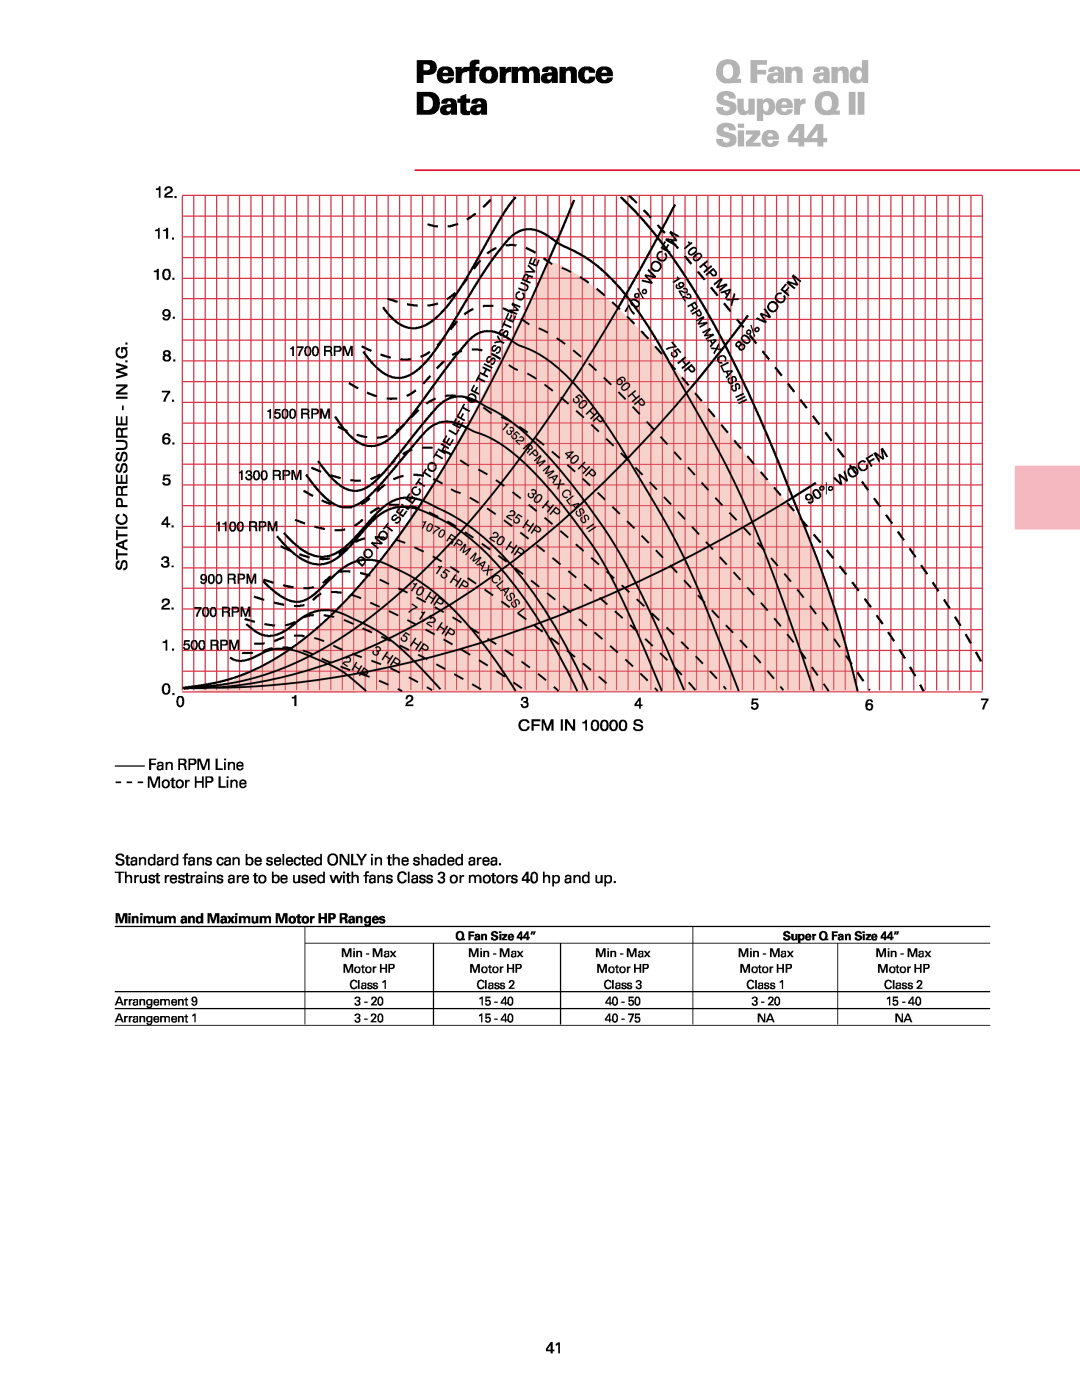 Trane manual Performance, Q Fan and, Data, Super Q Fan Size 44” 